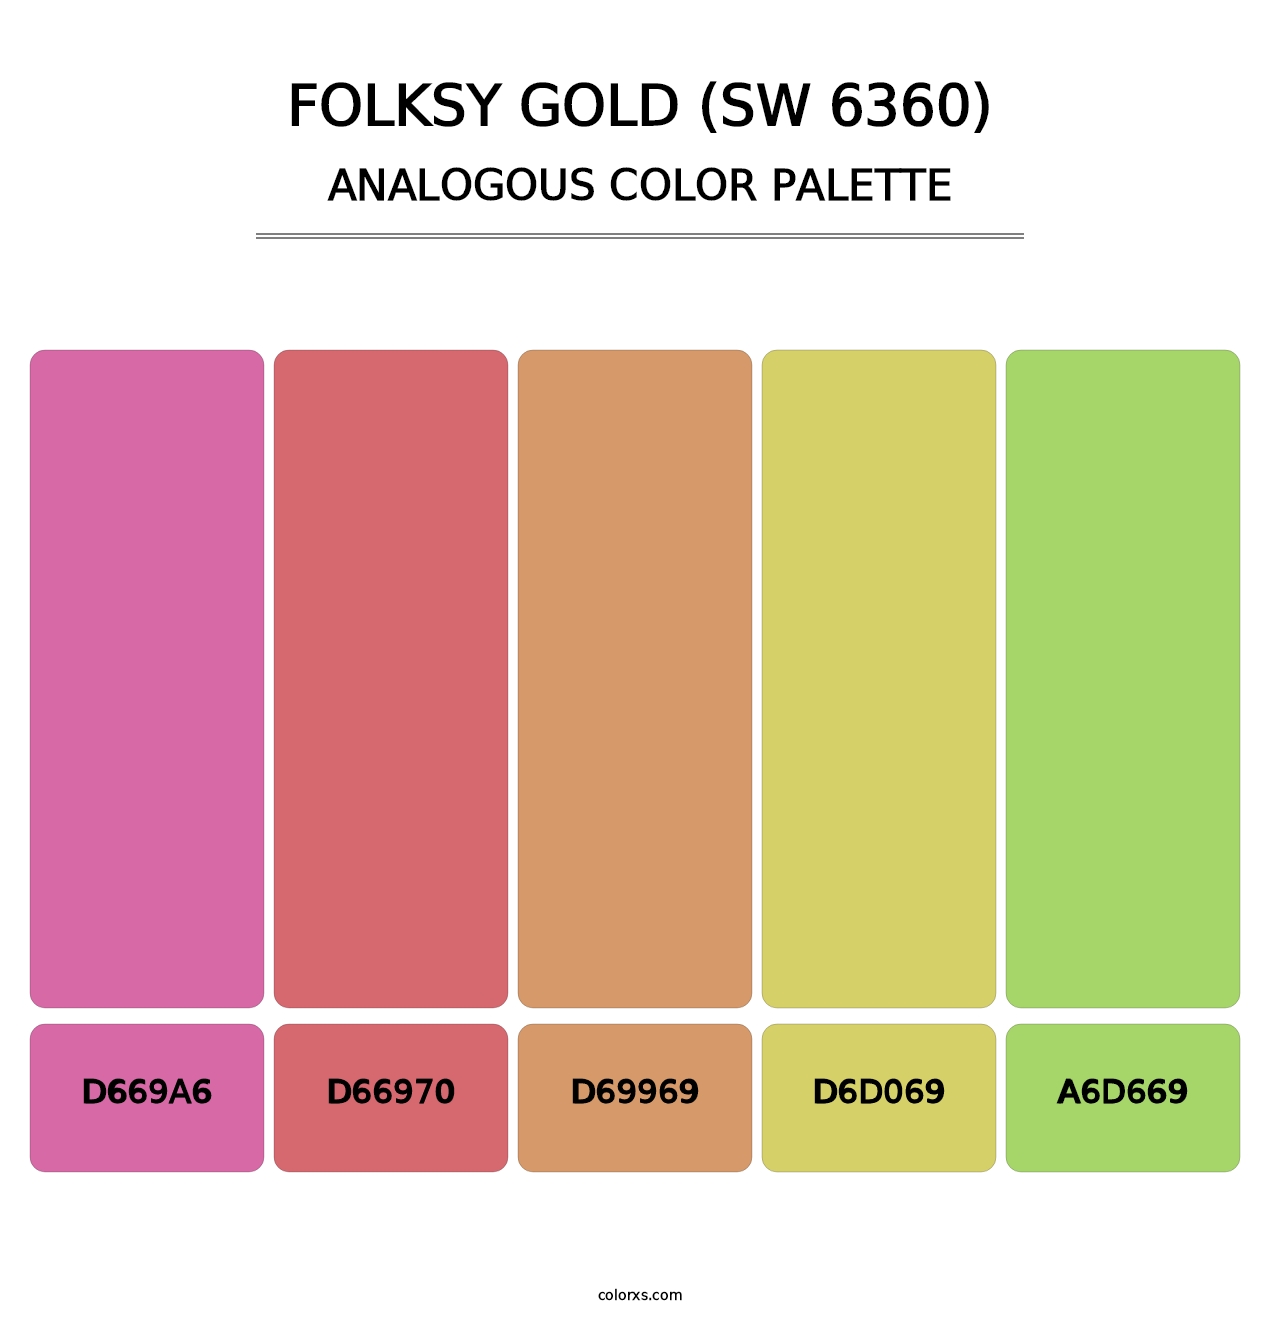 Folksy Gold (SW 6360) - Analogous Color Palette